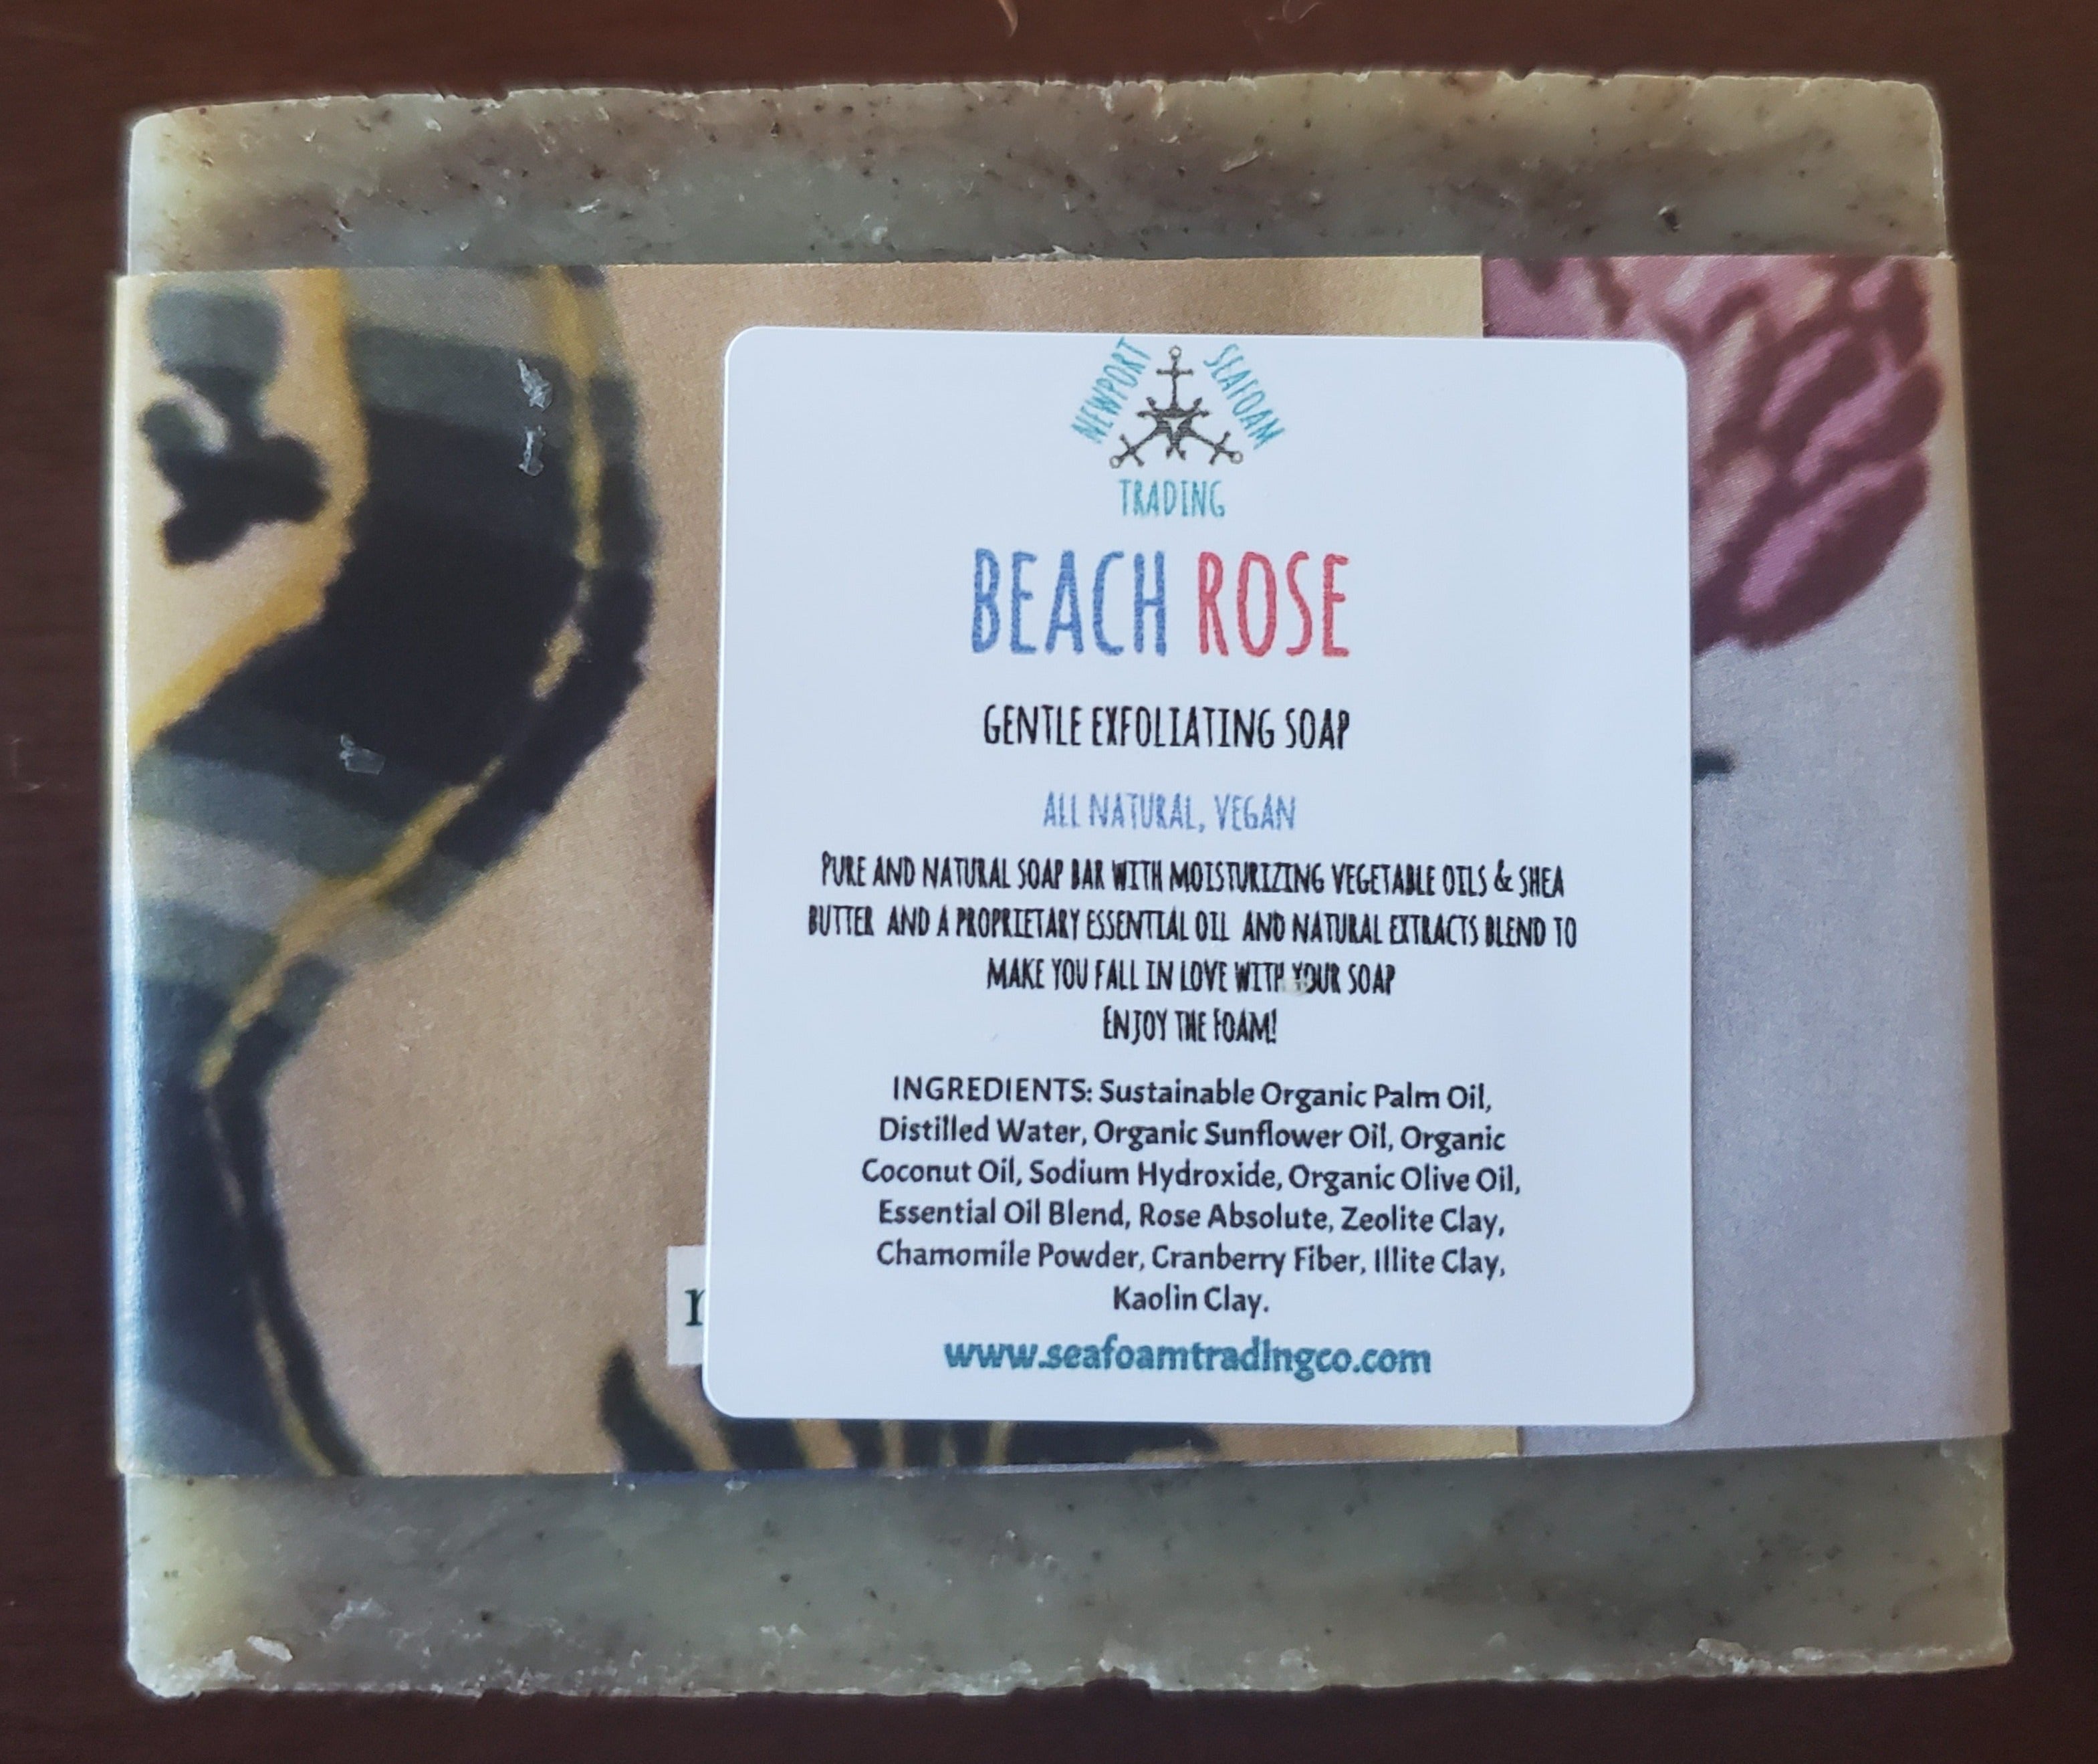 Rough Point Beach Rose Soap